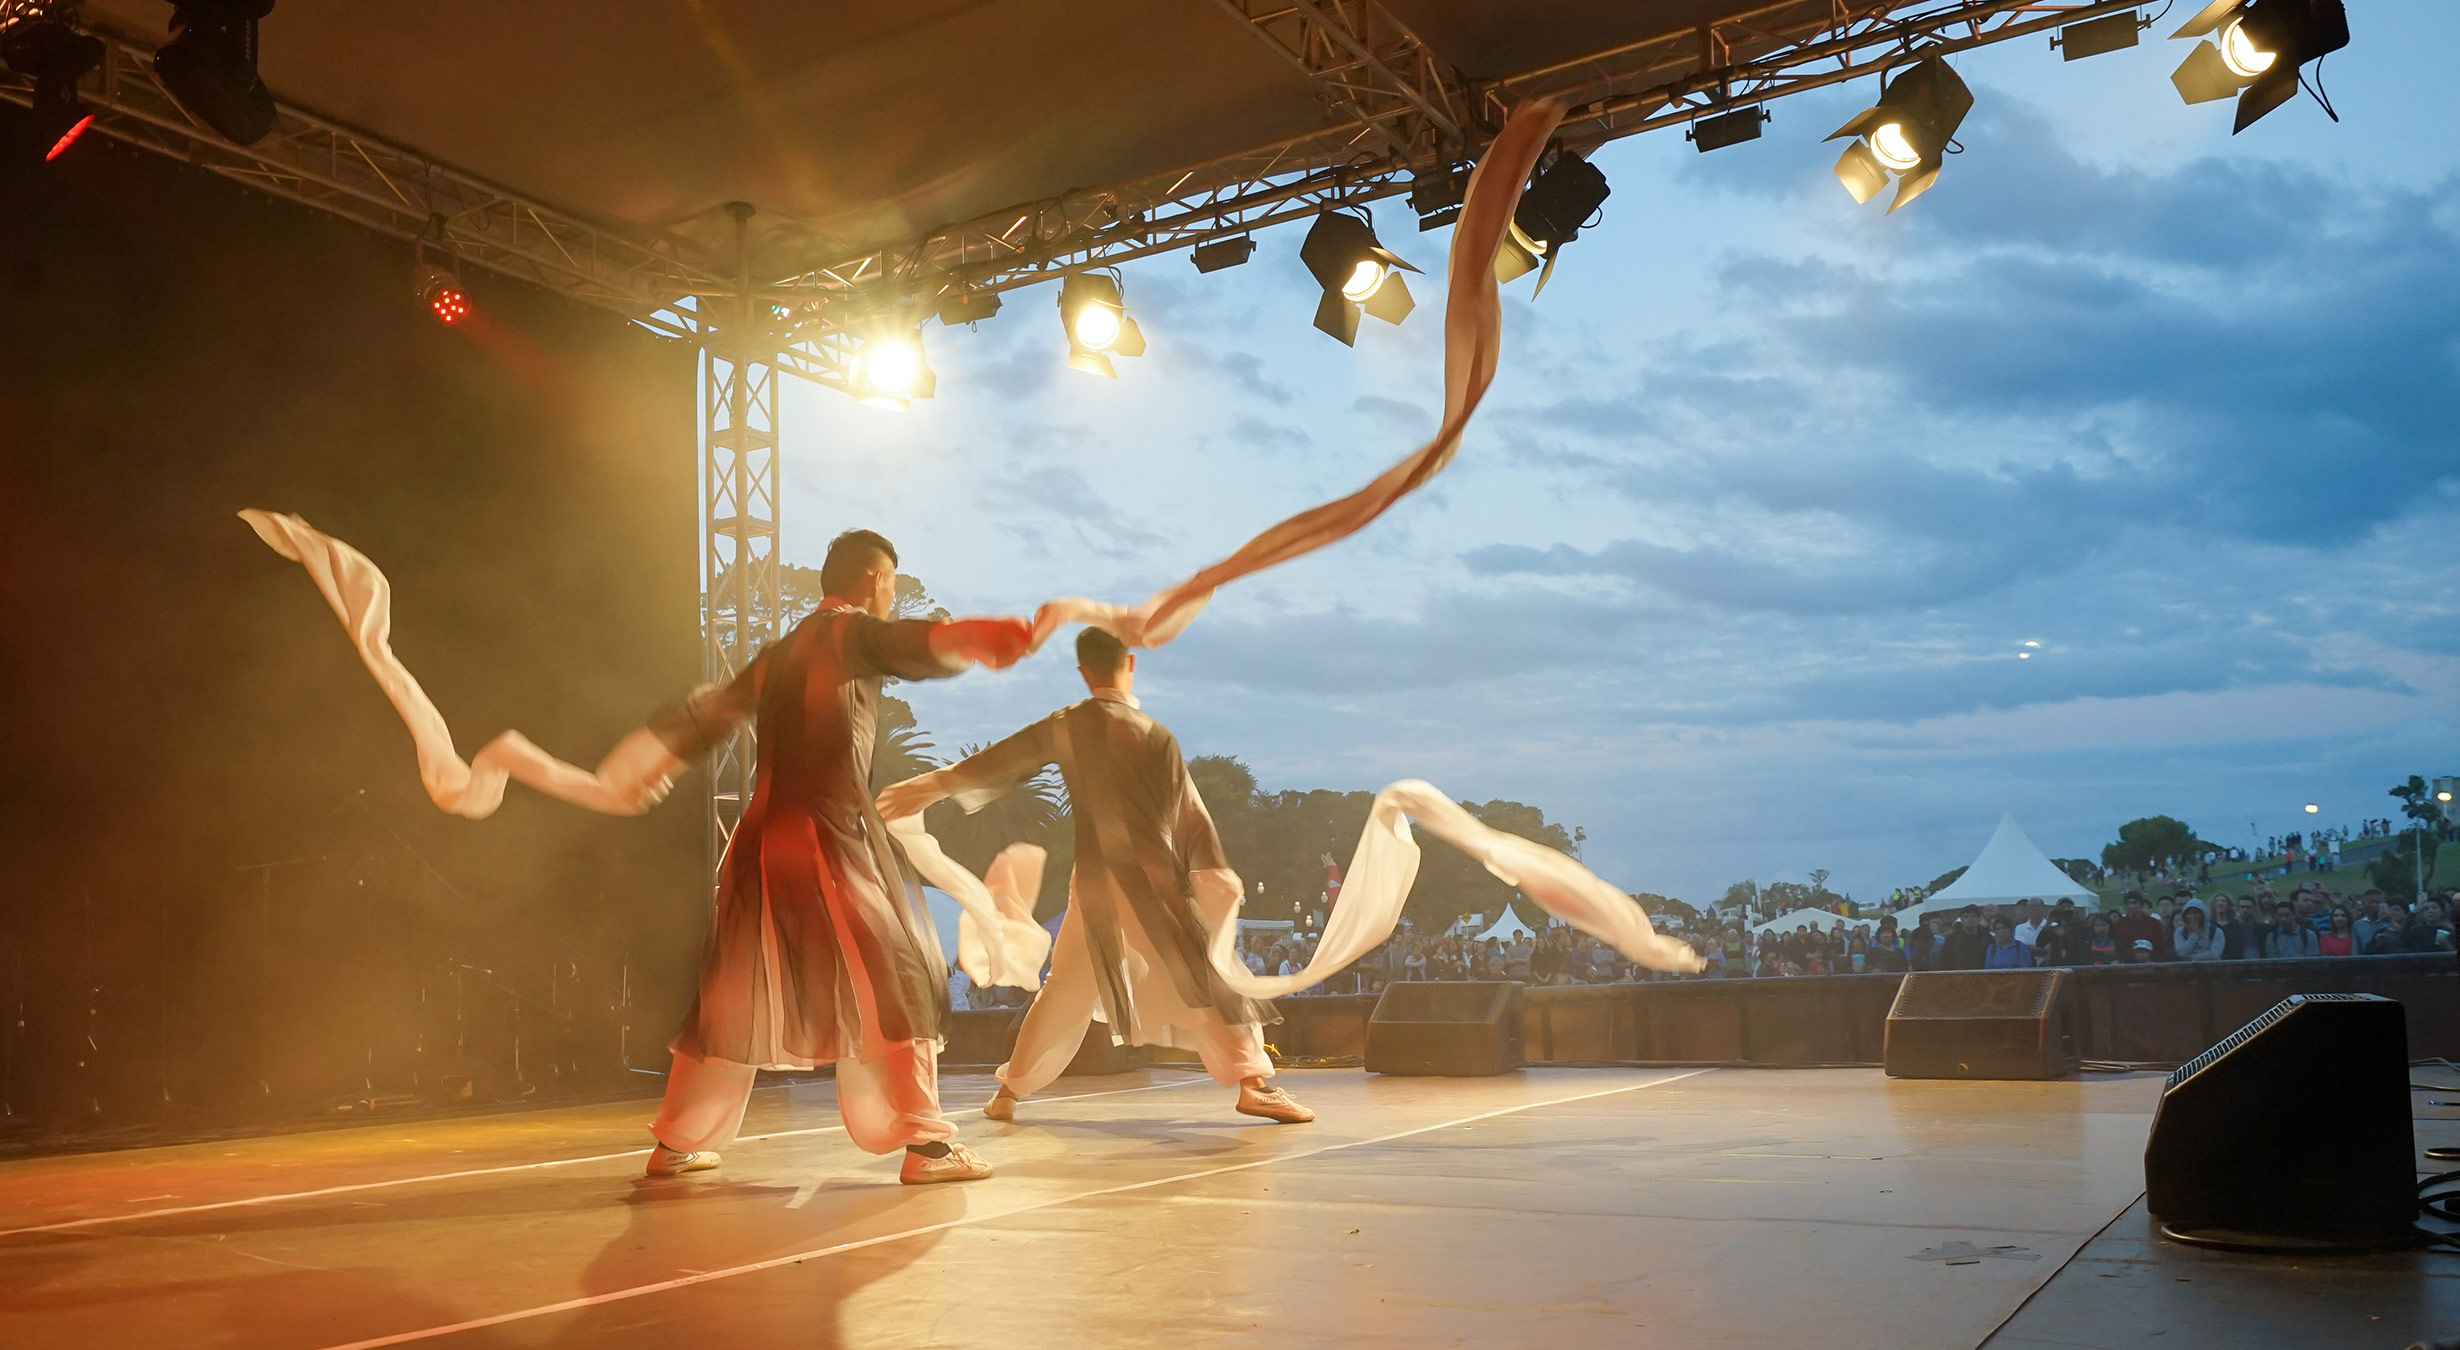 Auckland Lantern Festival 2022 roars into the summer calendar.